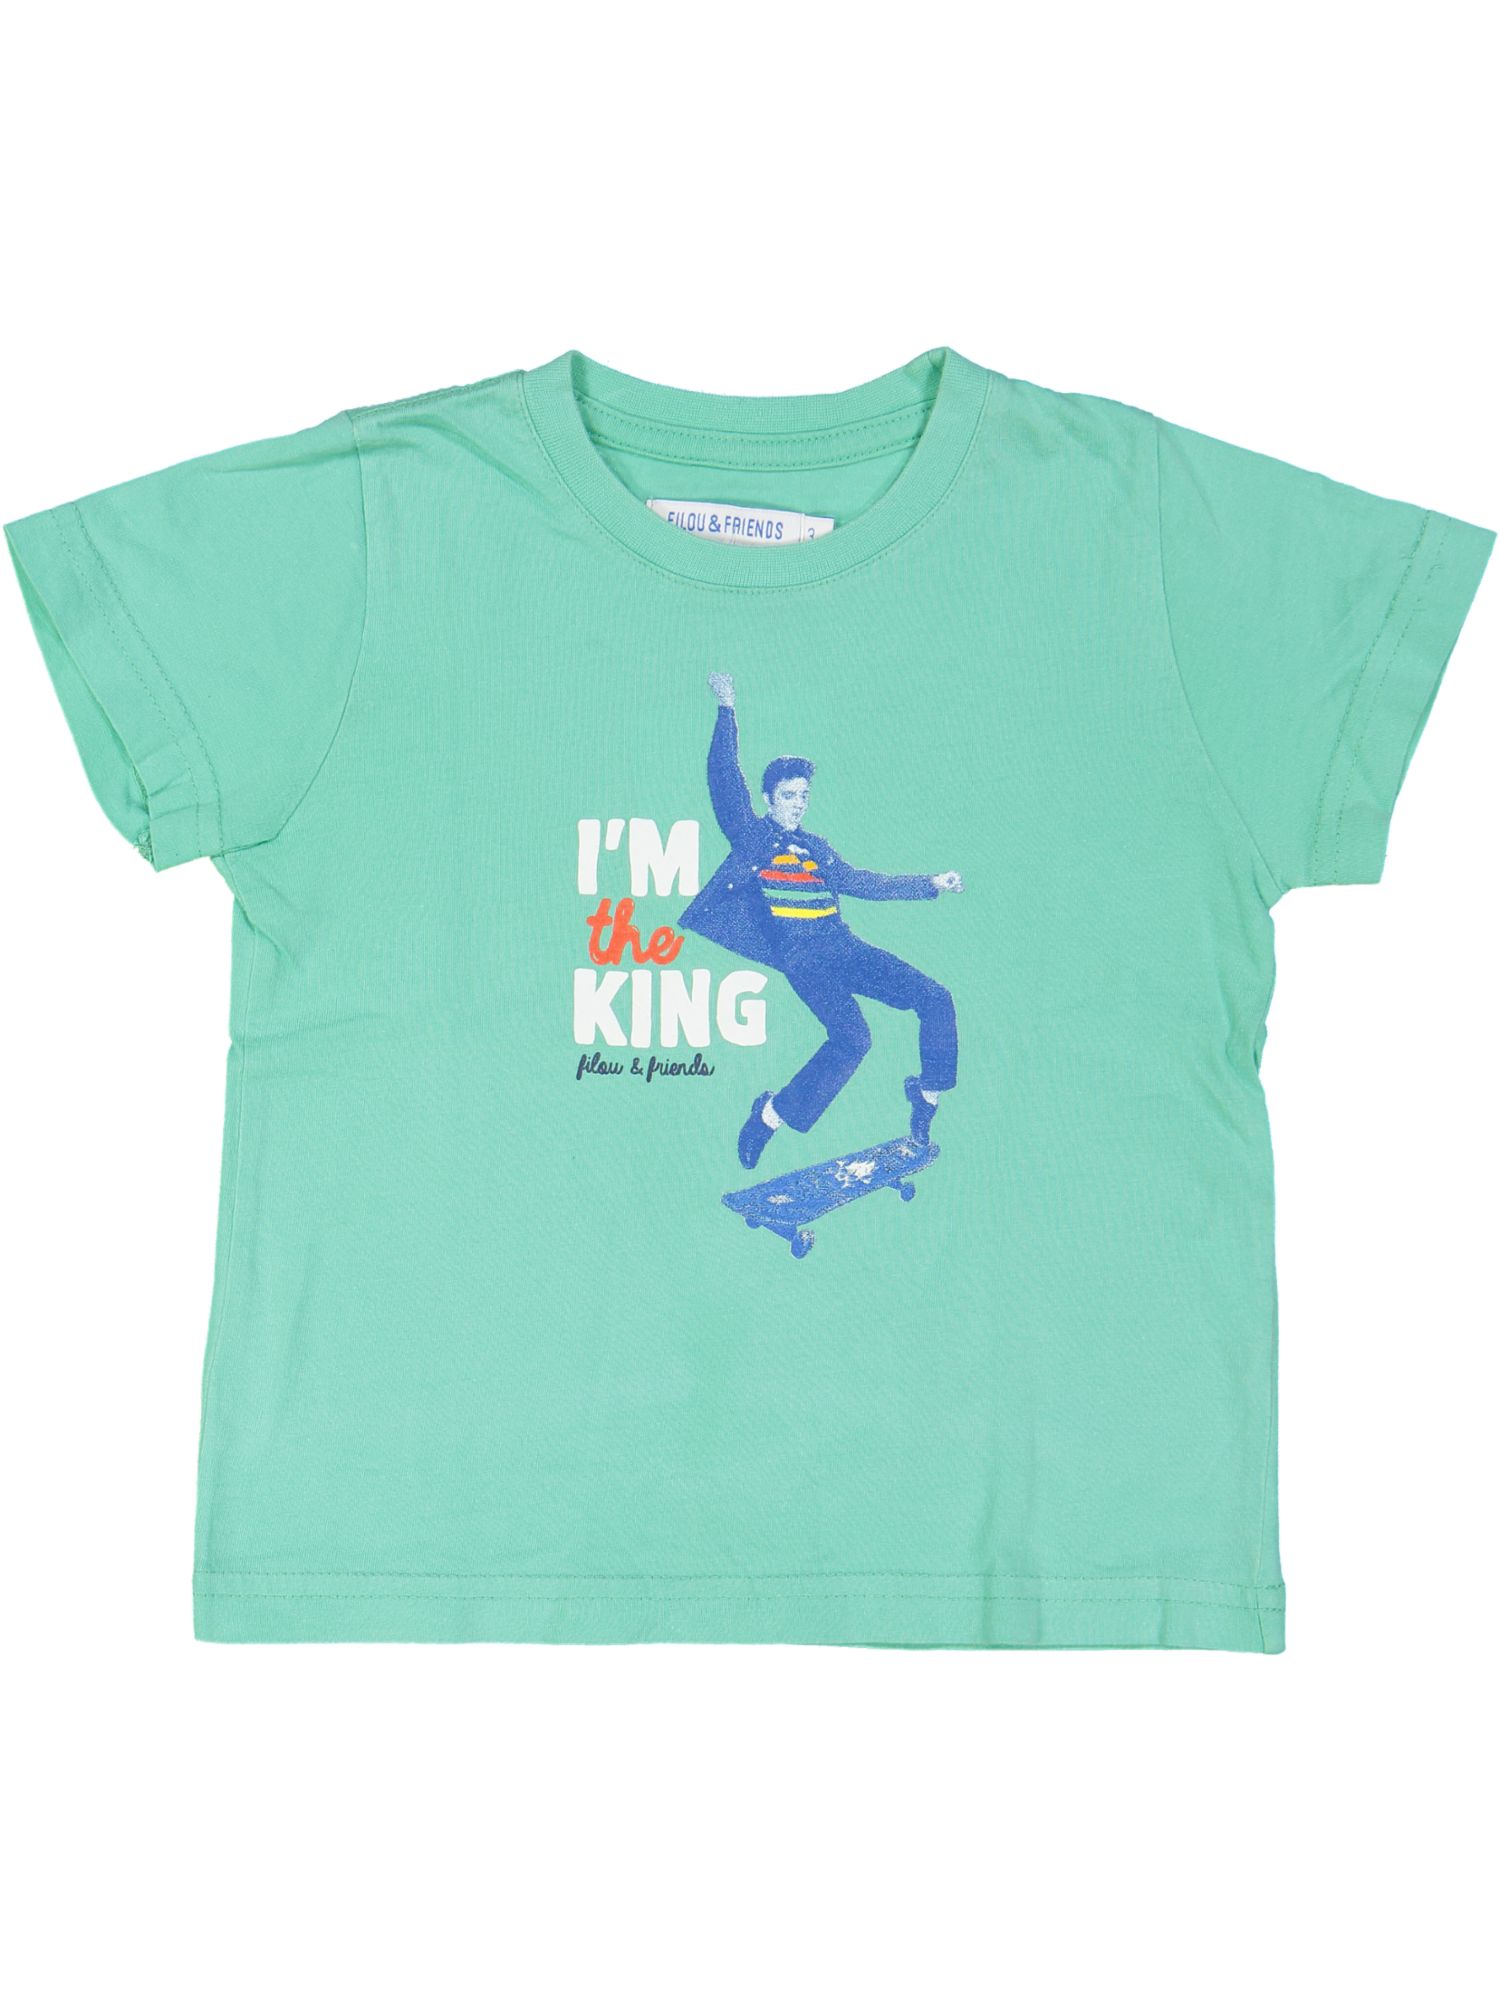 t-shirt groen i'm the king elvis 03j .